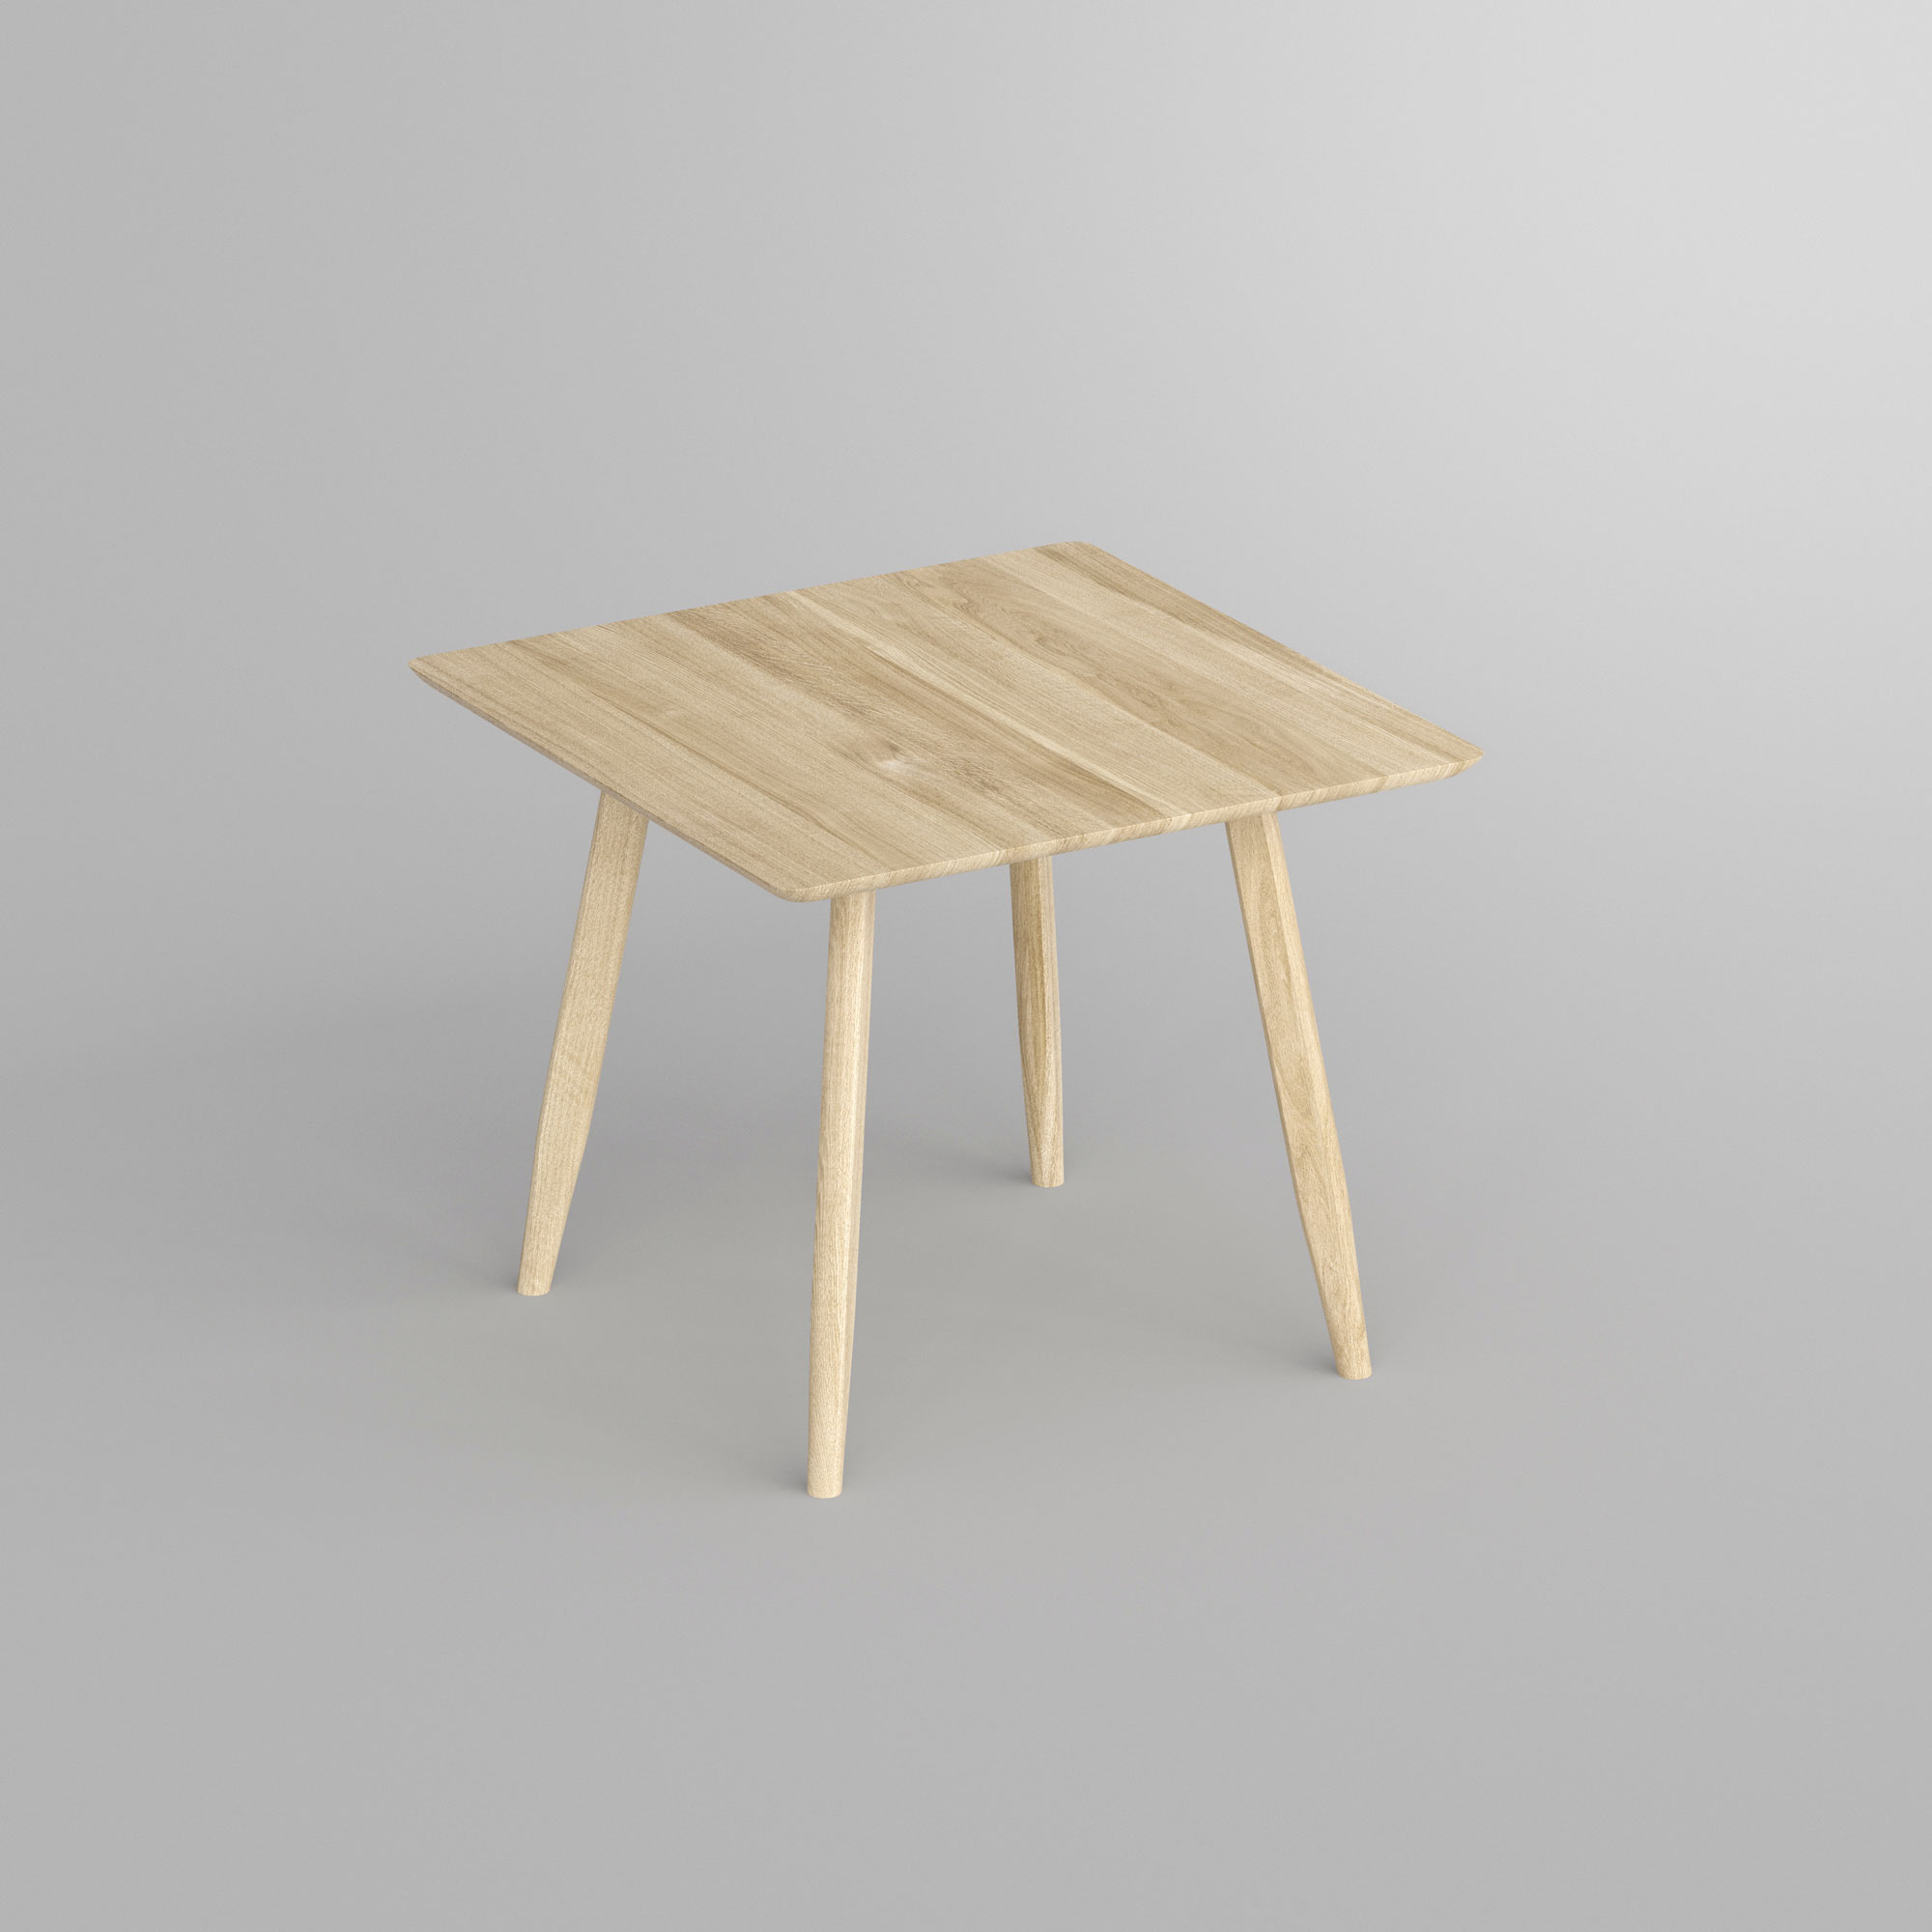 Designer Dining Table Wood AETAS BASIC 3 vitamin-design custom made in solid wood by vitamin design